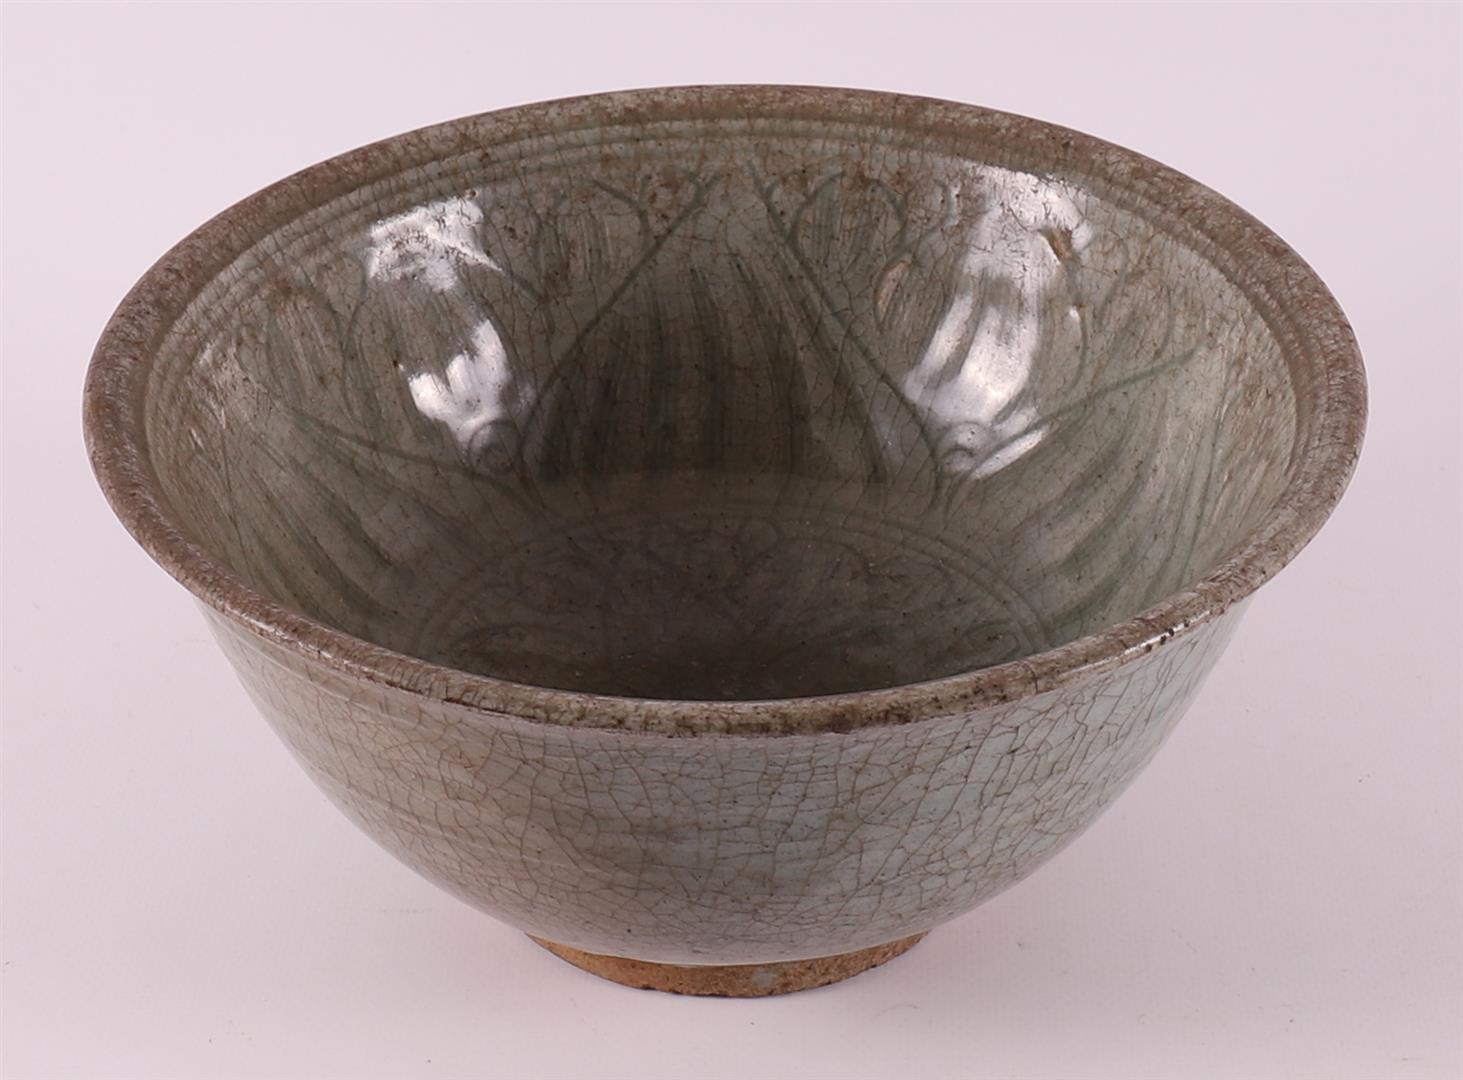 A celadon-glazed stoneware bowl, China, Song Dynasty (960-1279).